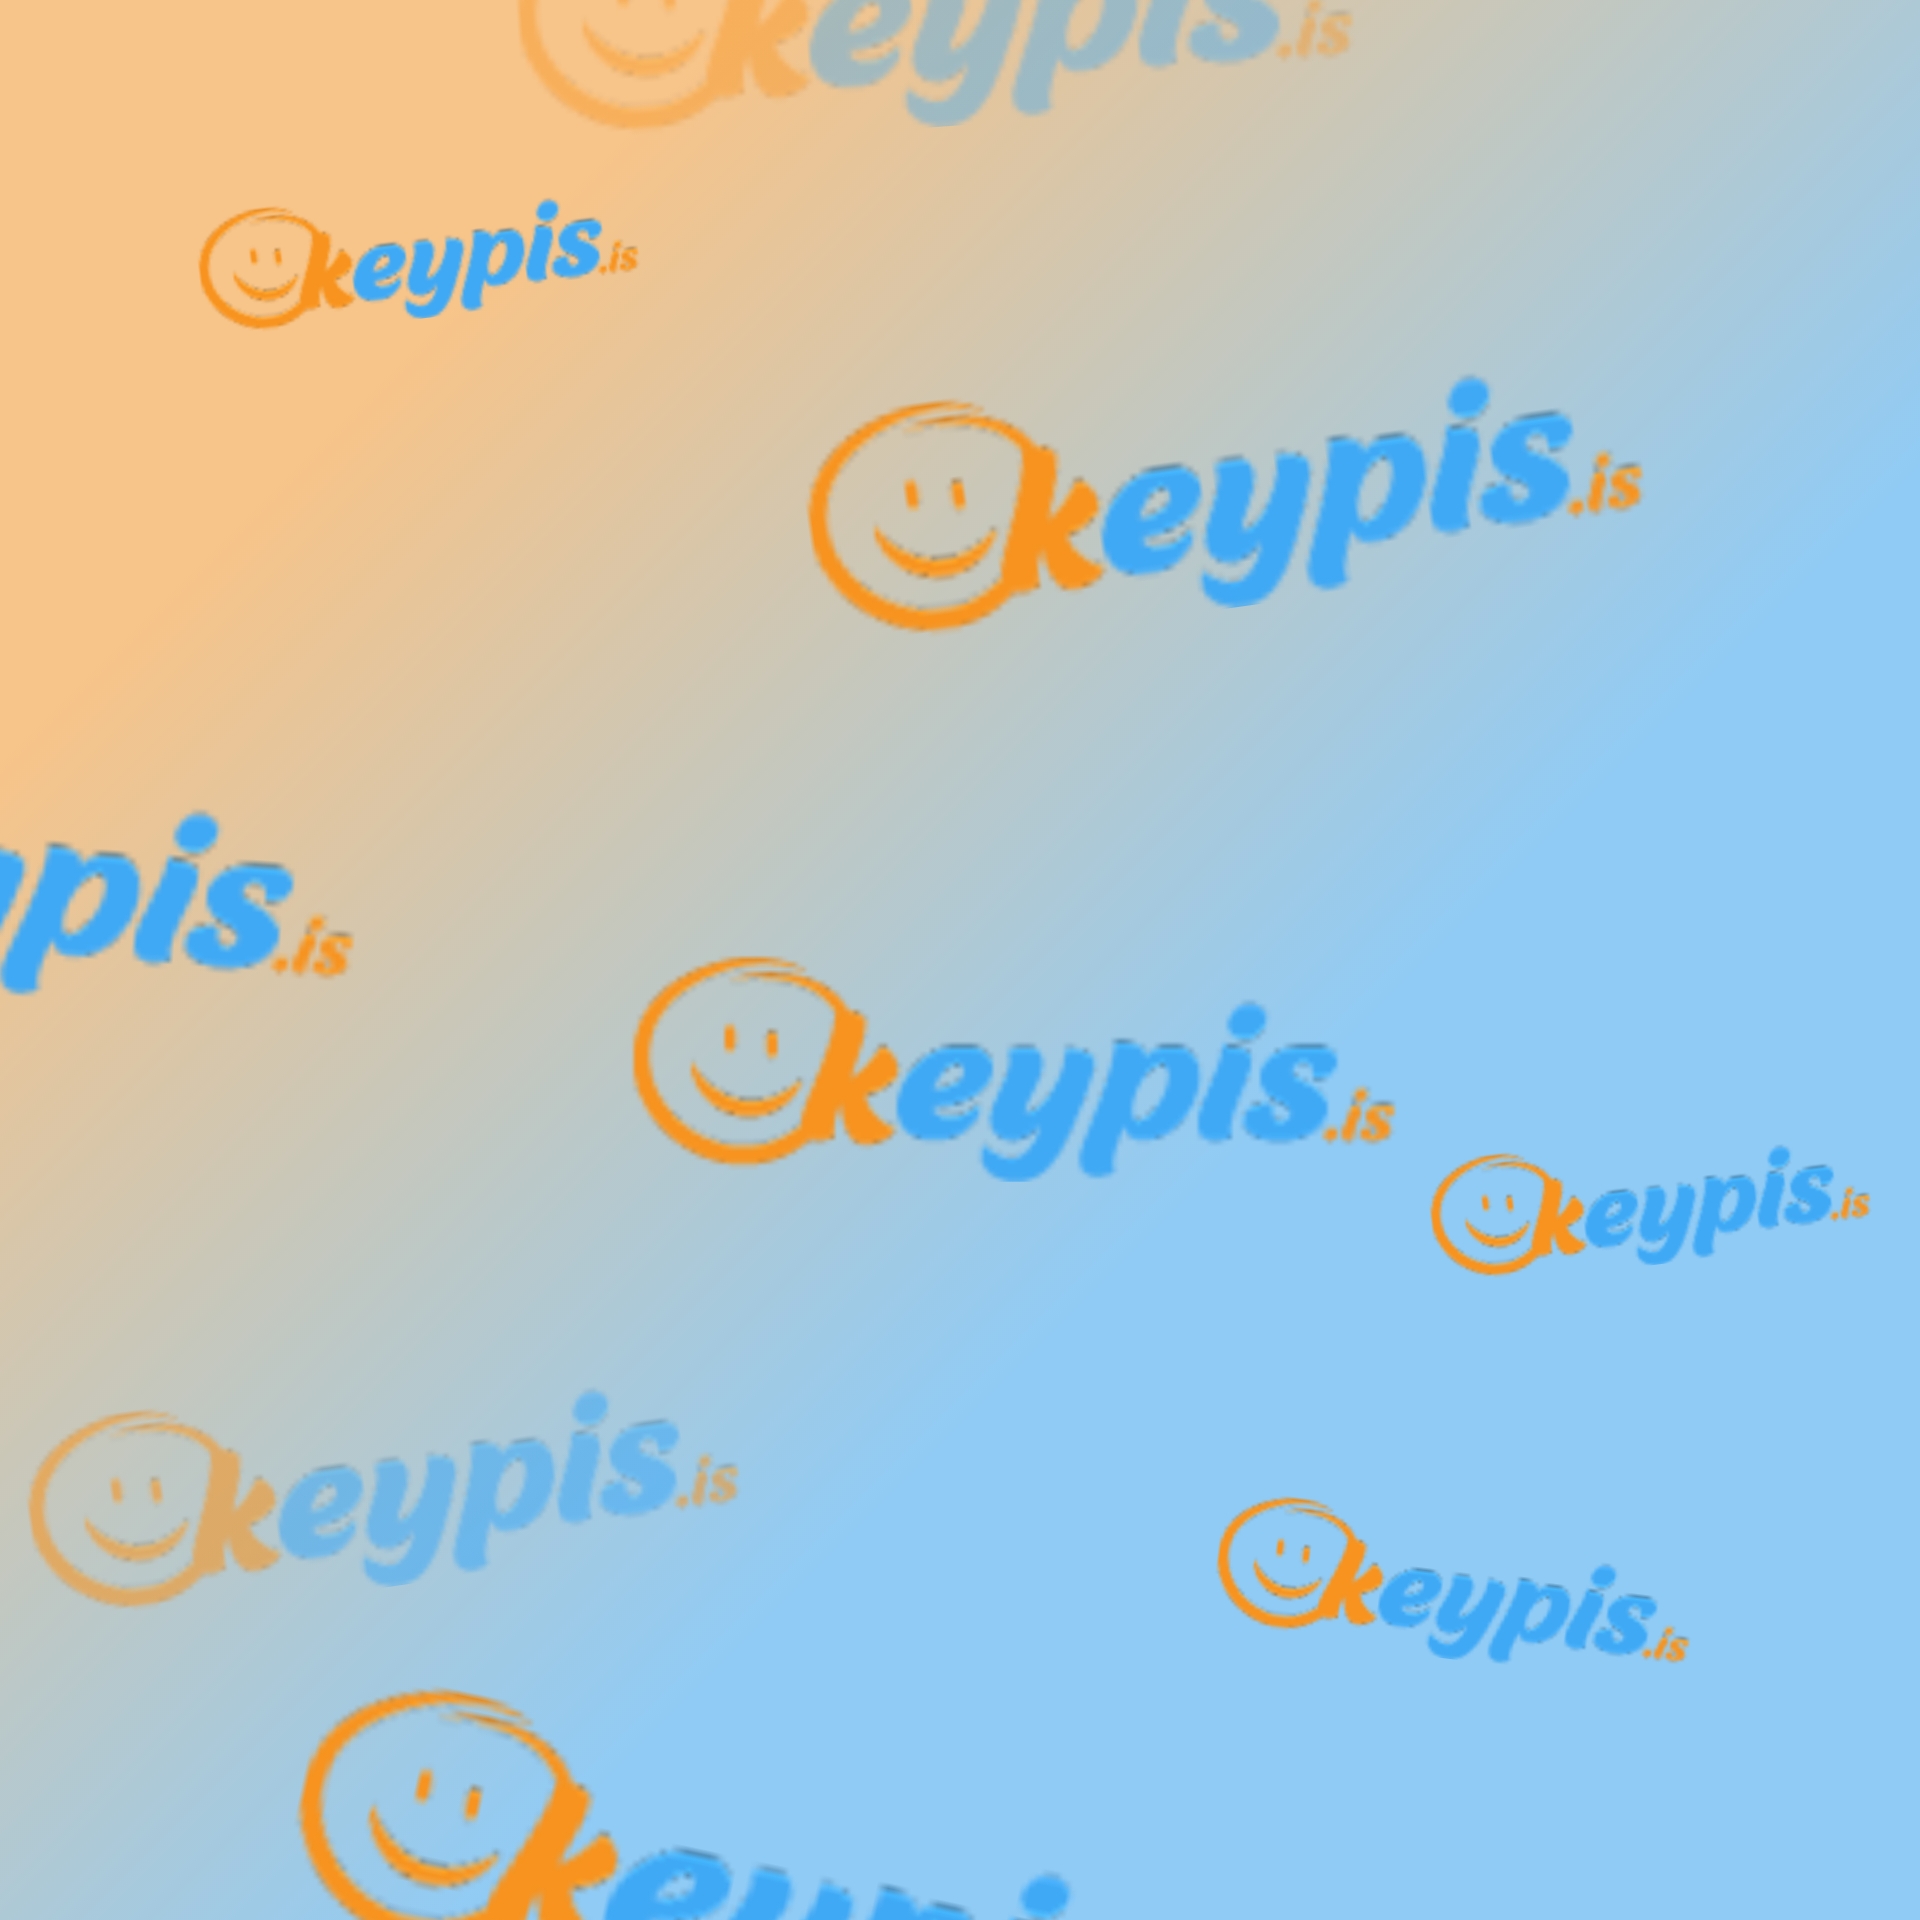 okeypis development logo showcase